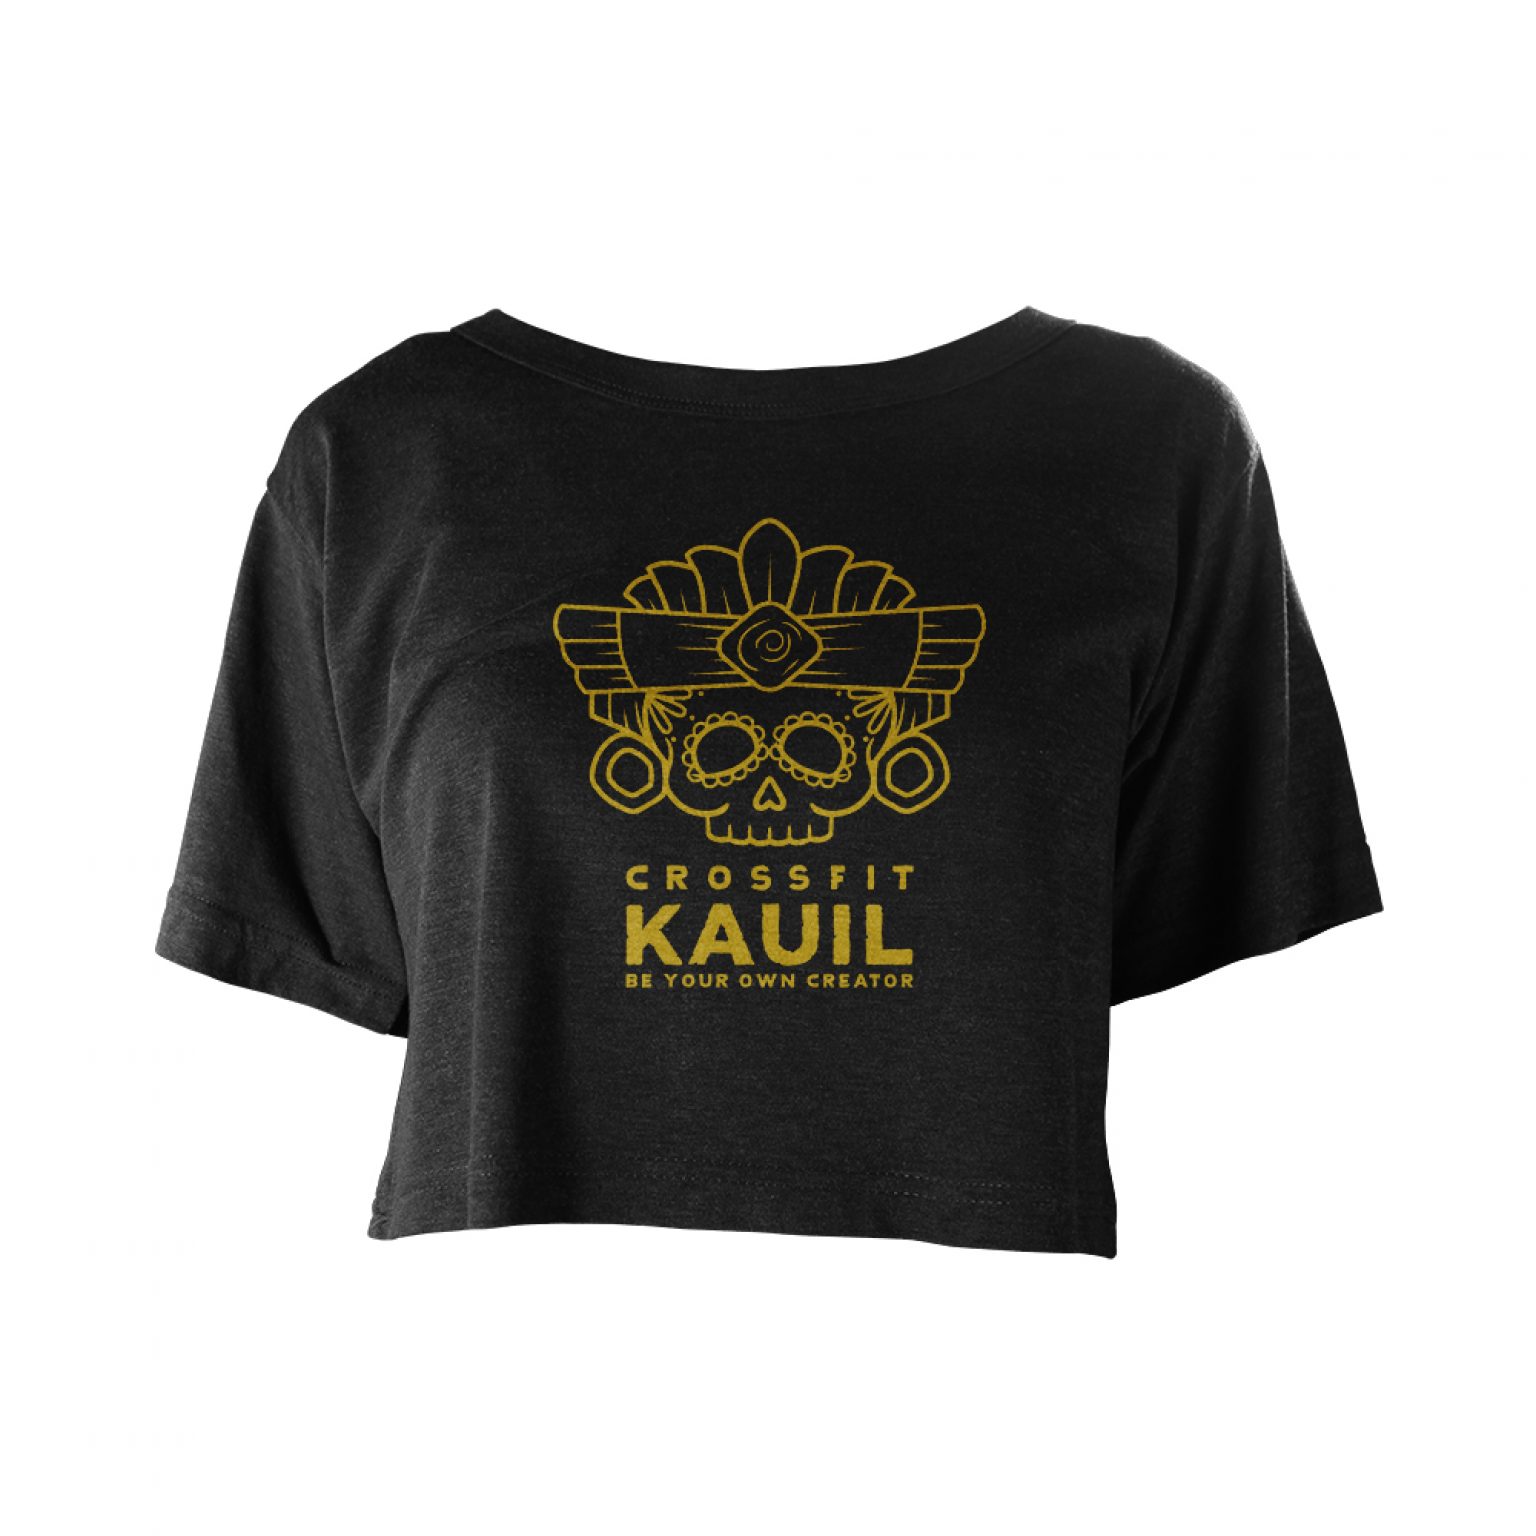 CrossFit Kauil Festival schwarz gold